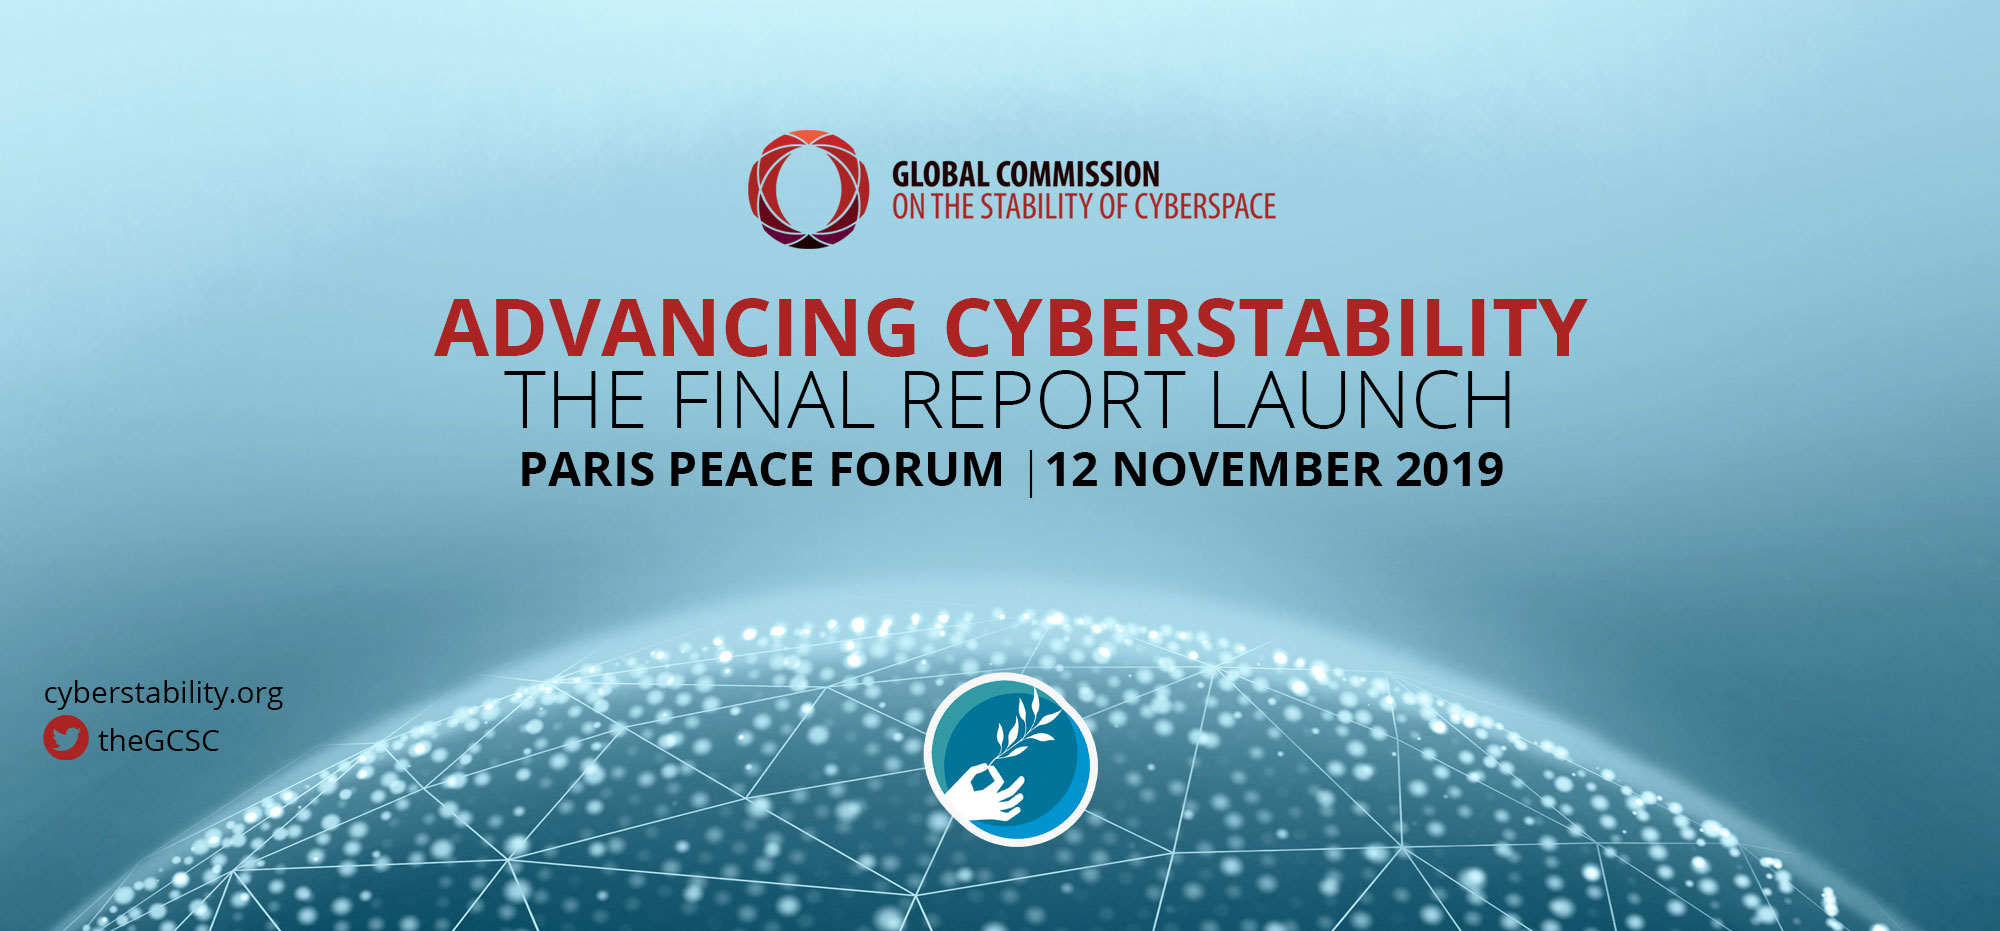 Presented at the Paris Peace Forum